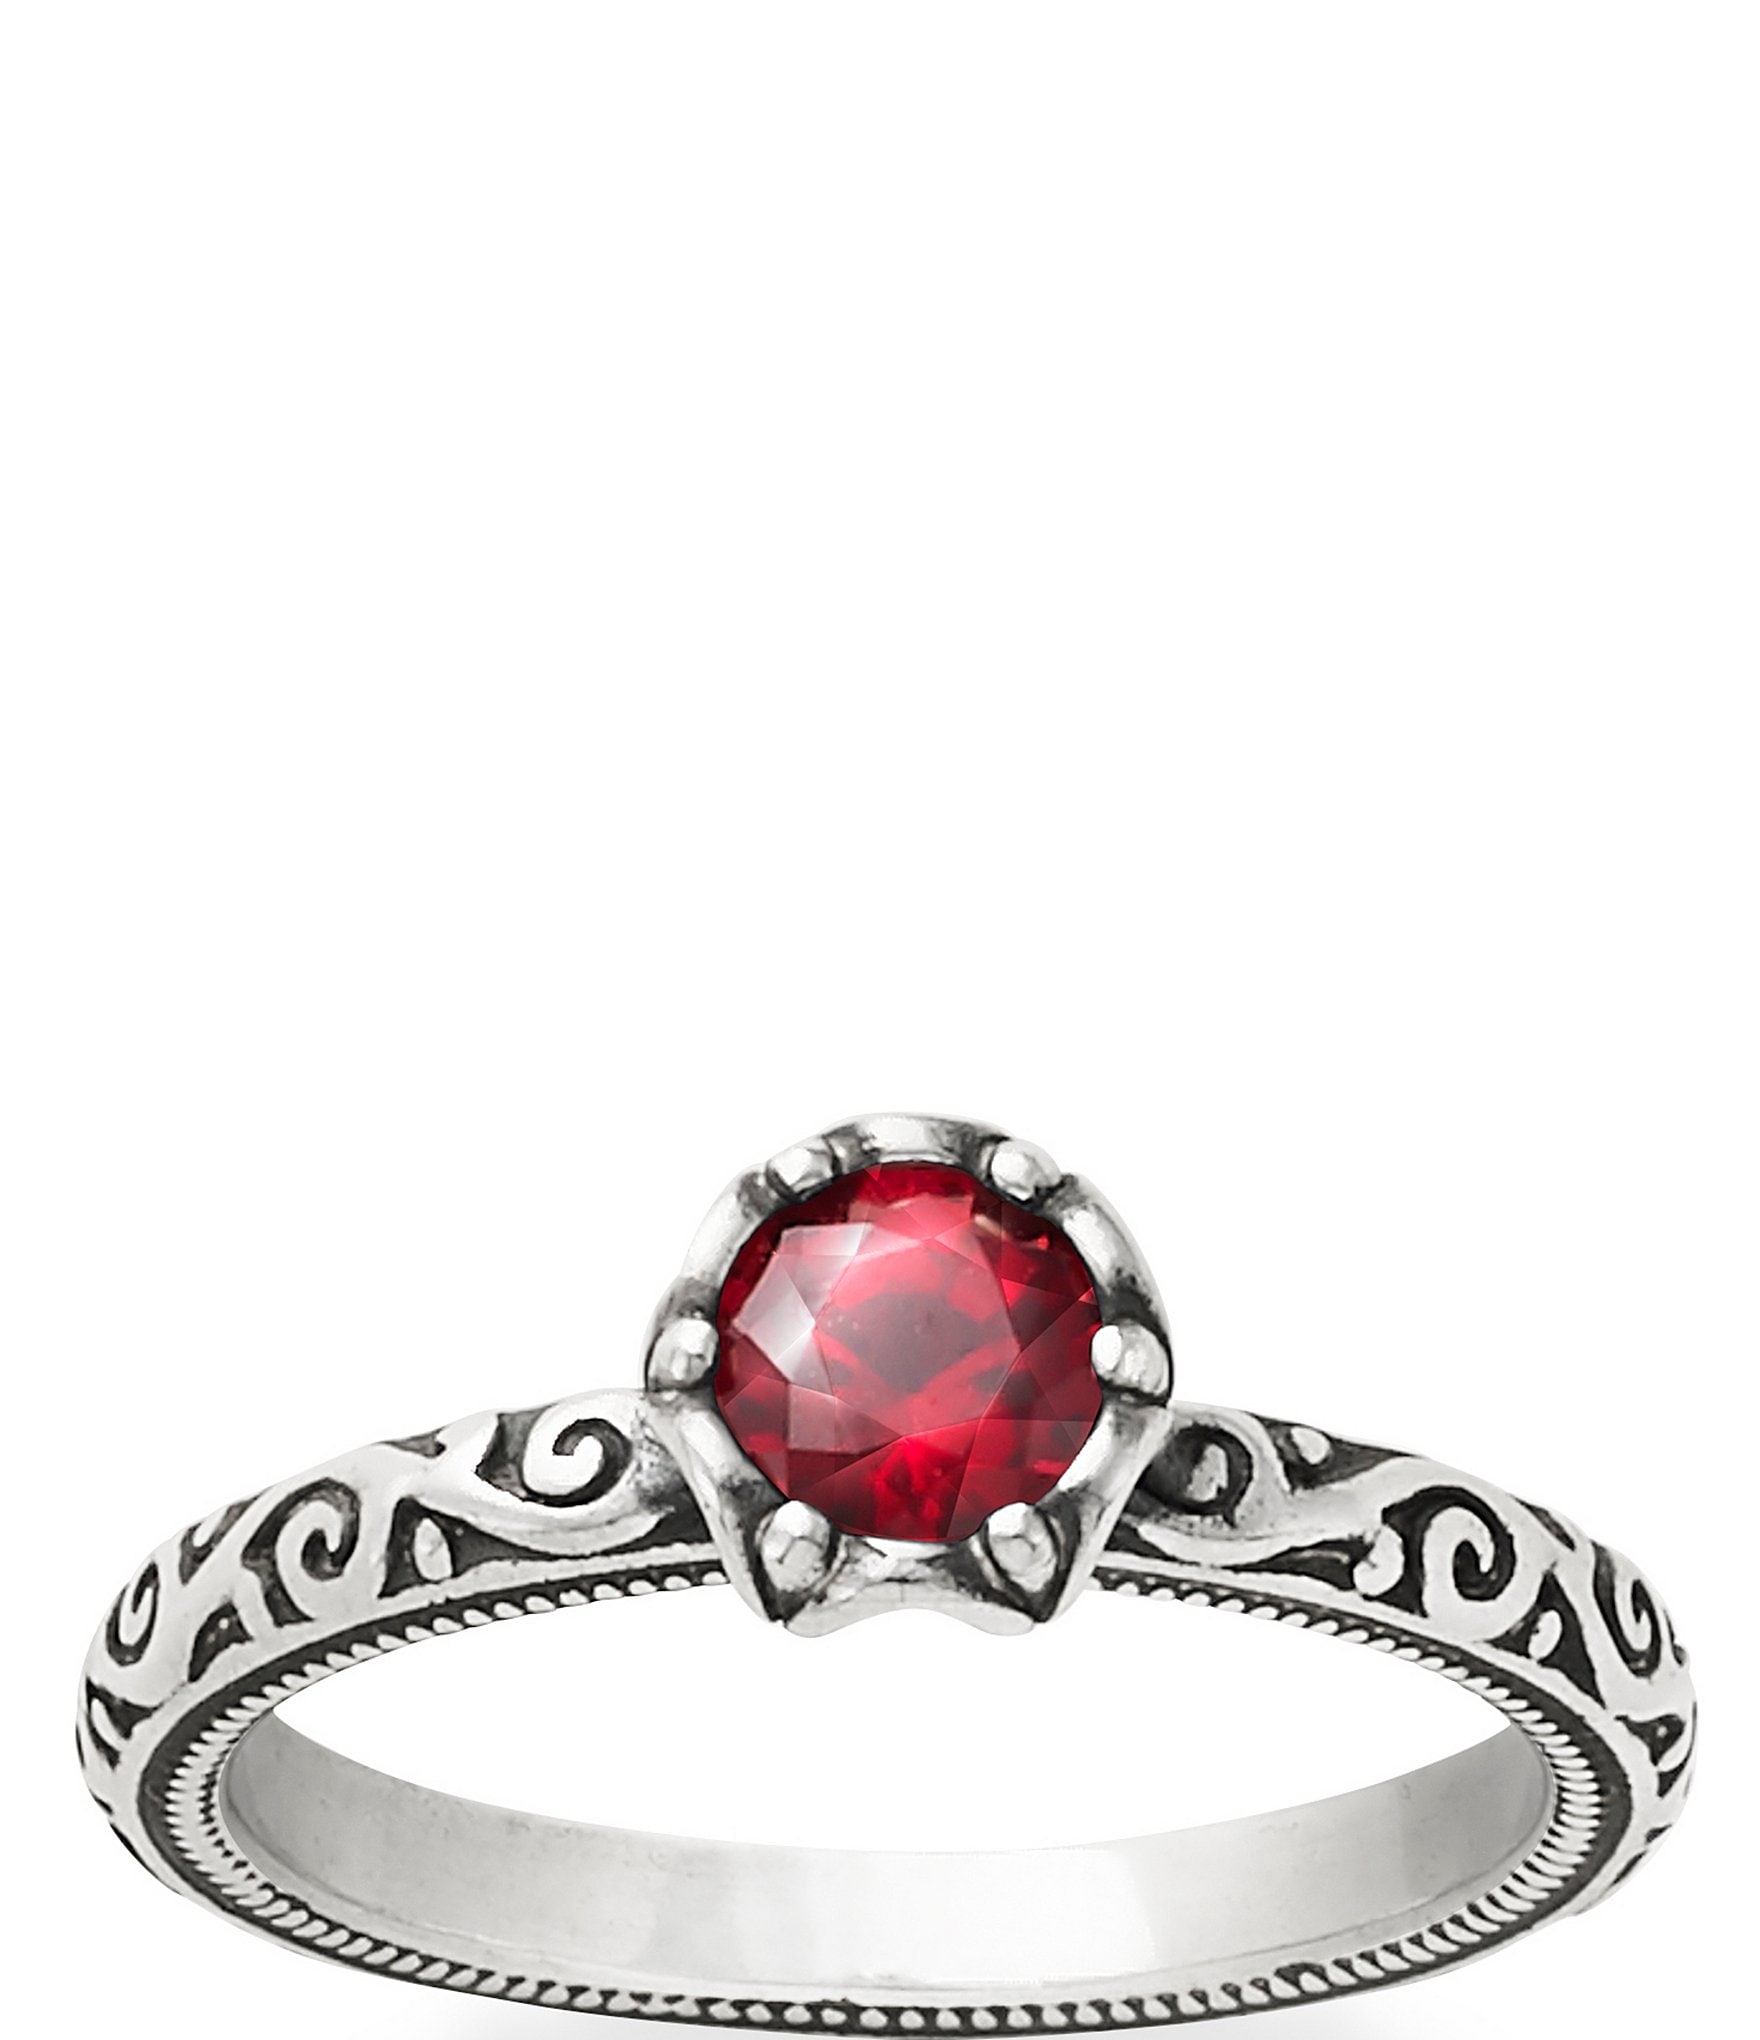 Buy Brilliant Cut Ruby Ring, Lab Ruby Engagement Ring, Vintage Ruby Ring, July  Ruby Birthstone Ring, Unique Ruby Birthstone Ring Online in India - Etsy